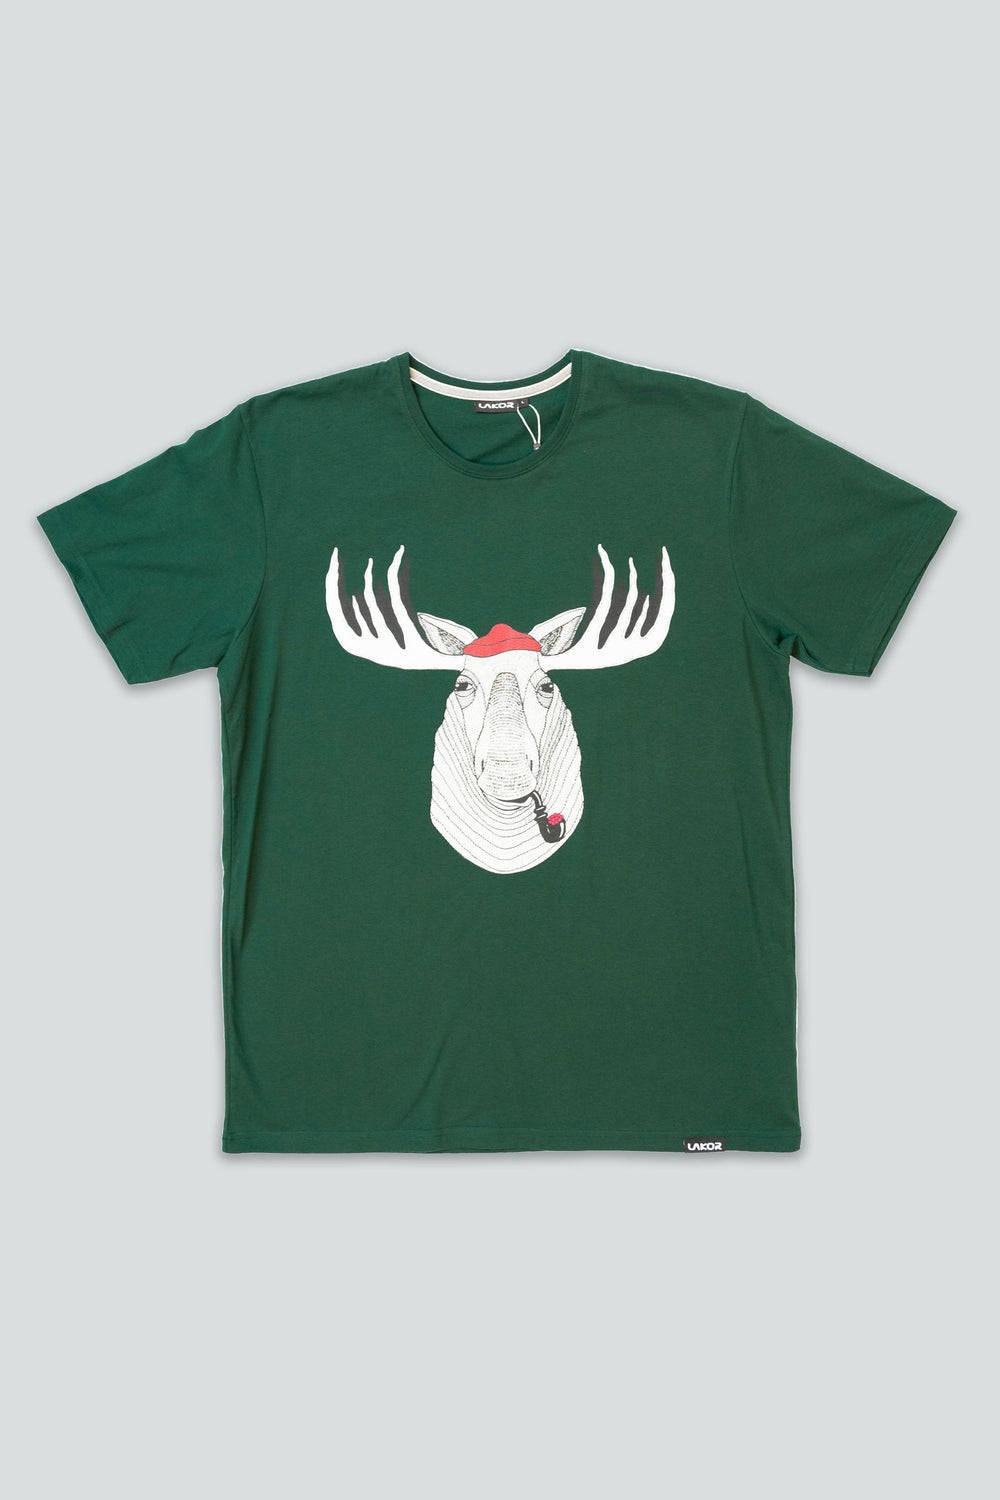 Lakor Big Moose T-shirt, green